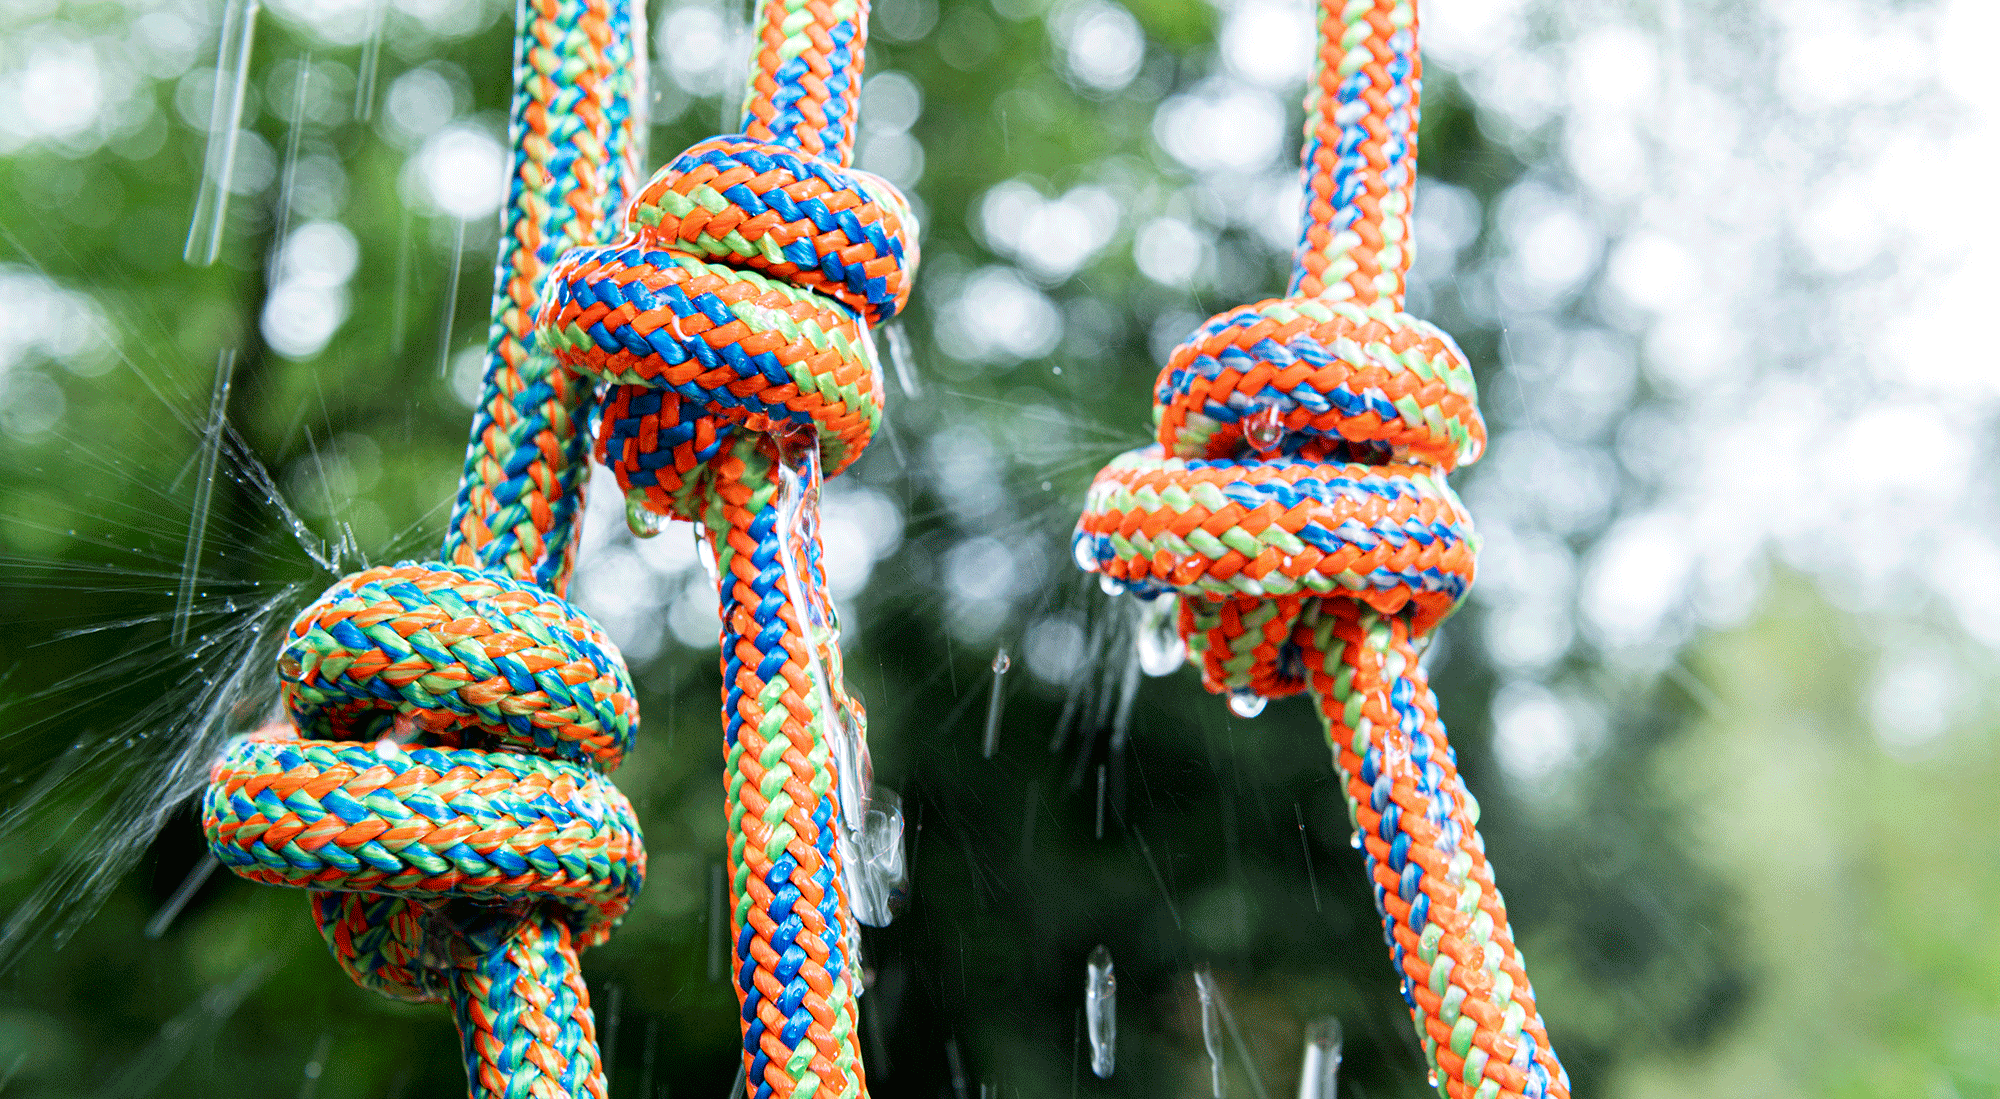 3 wet ropes